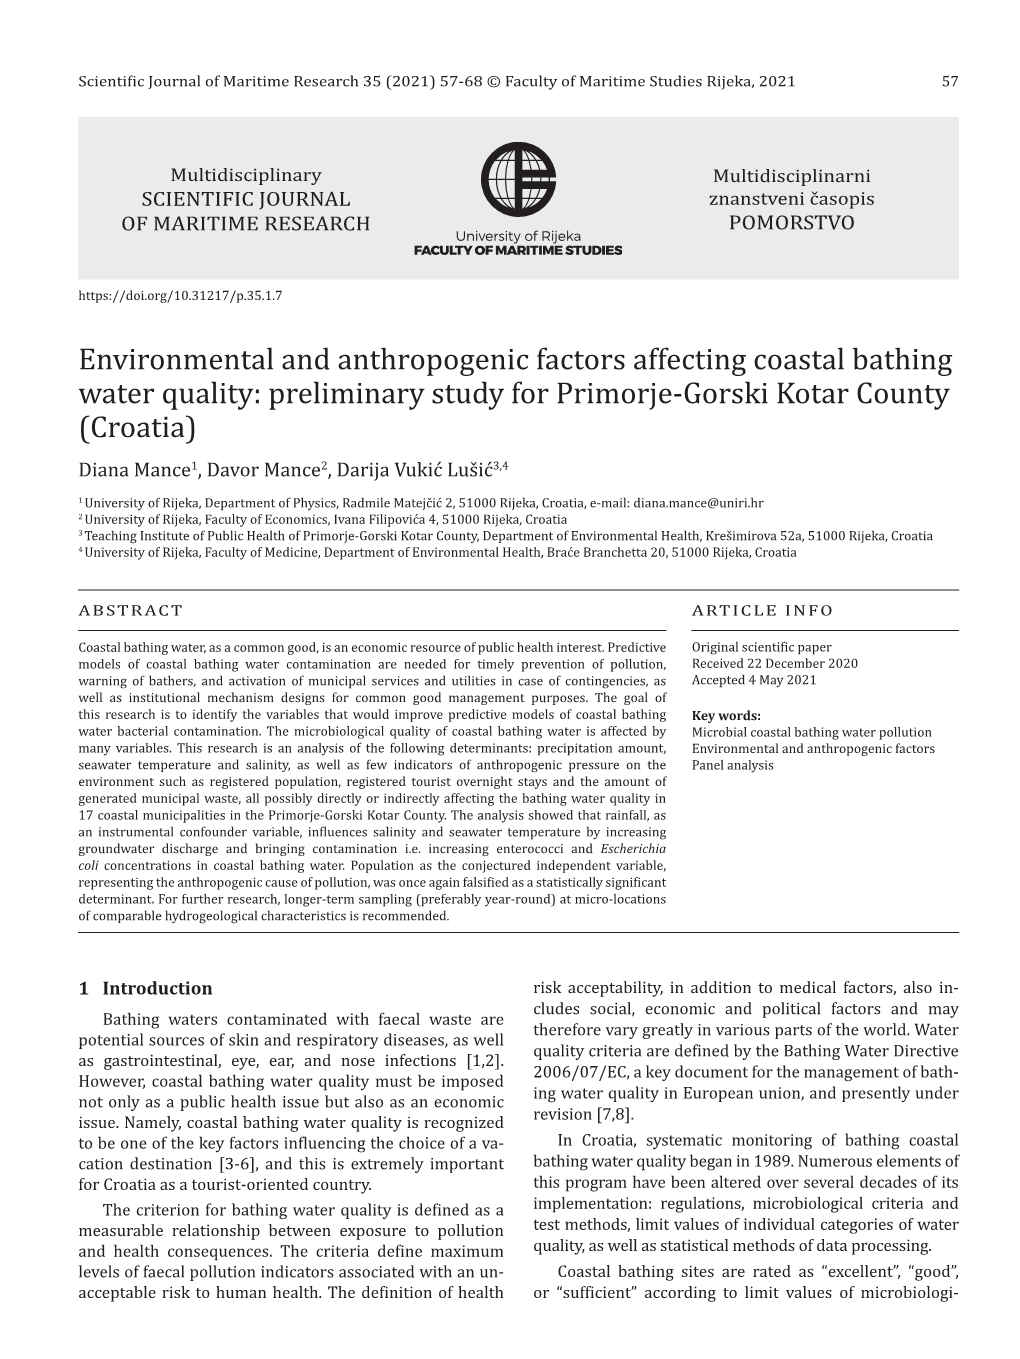 Environmental and Anthropogenic Factors Affecting Coastal Bathing